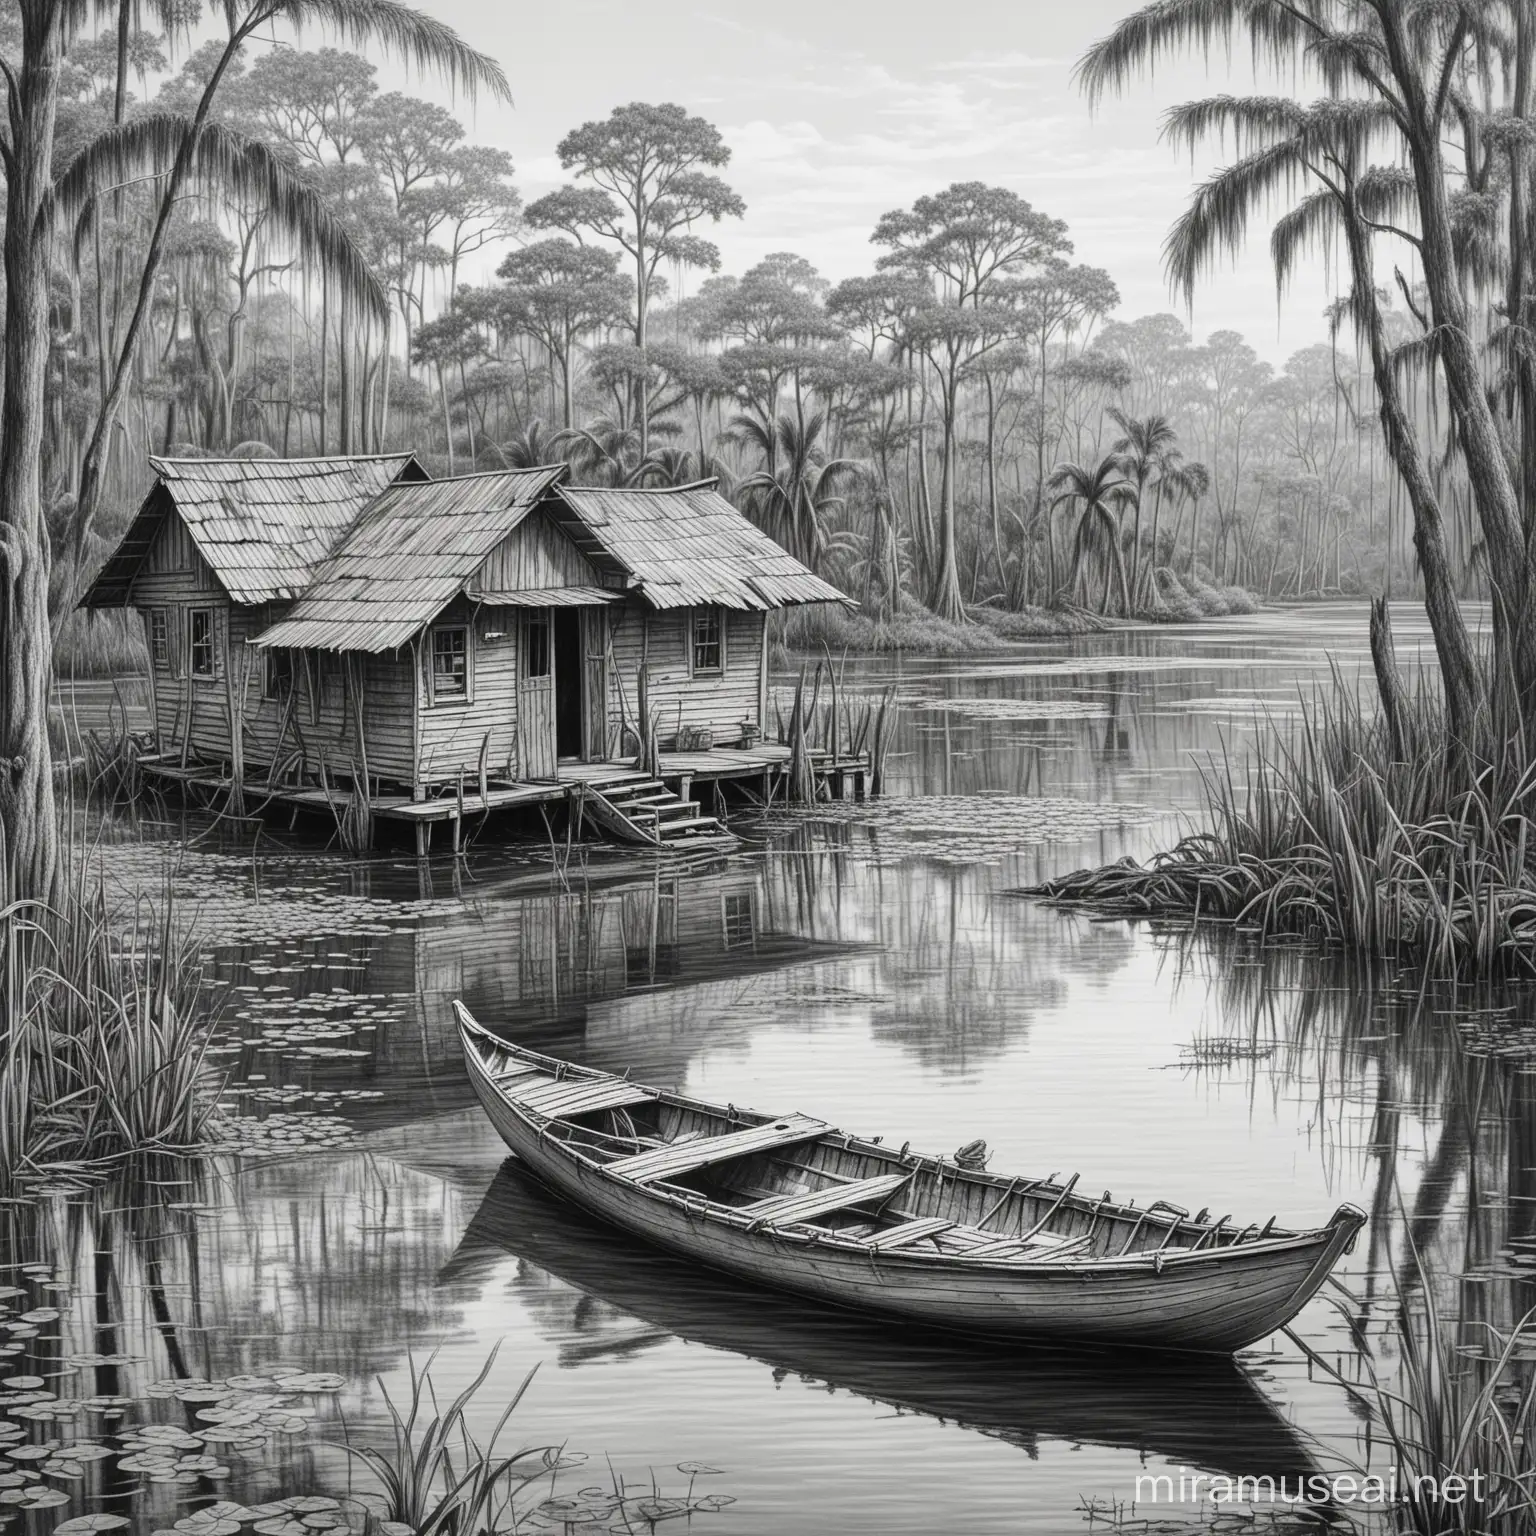 Louisiana Swamp Scene with Pirogue and Alligator